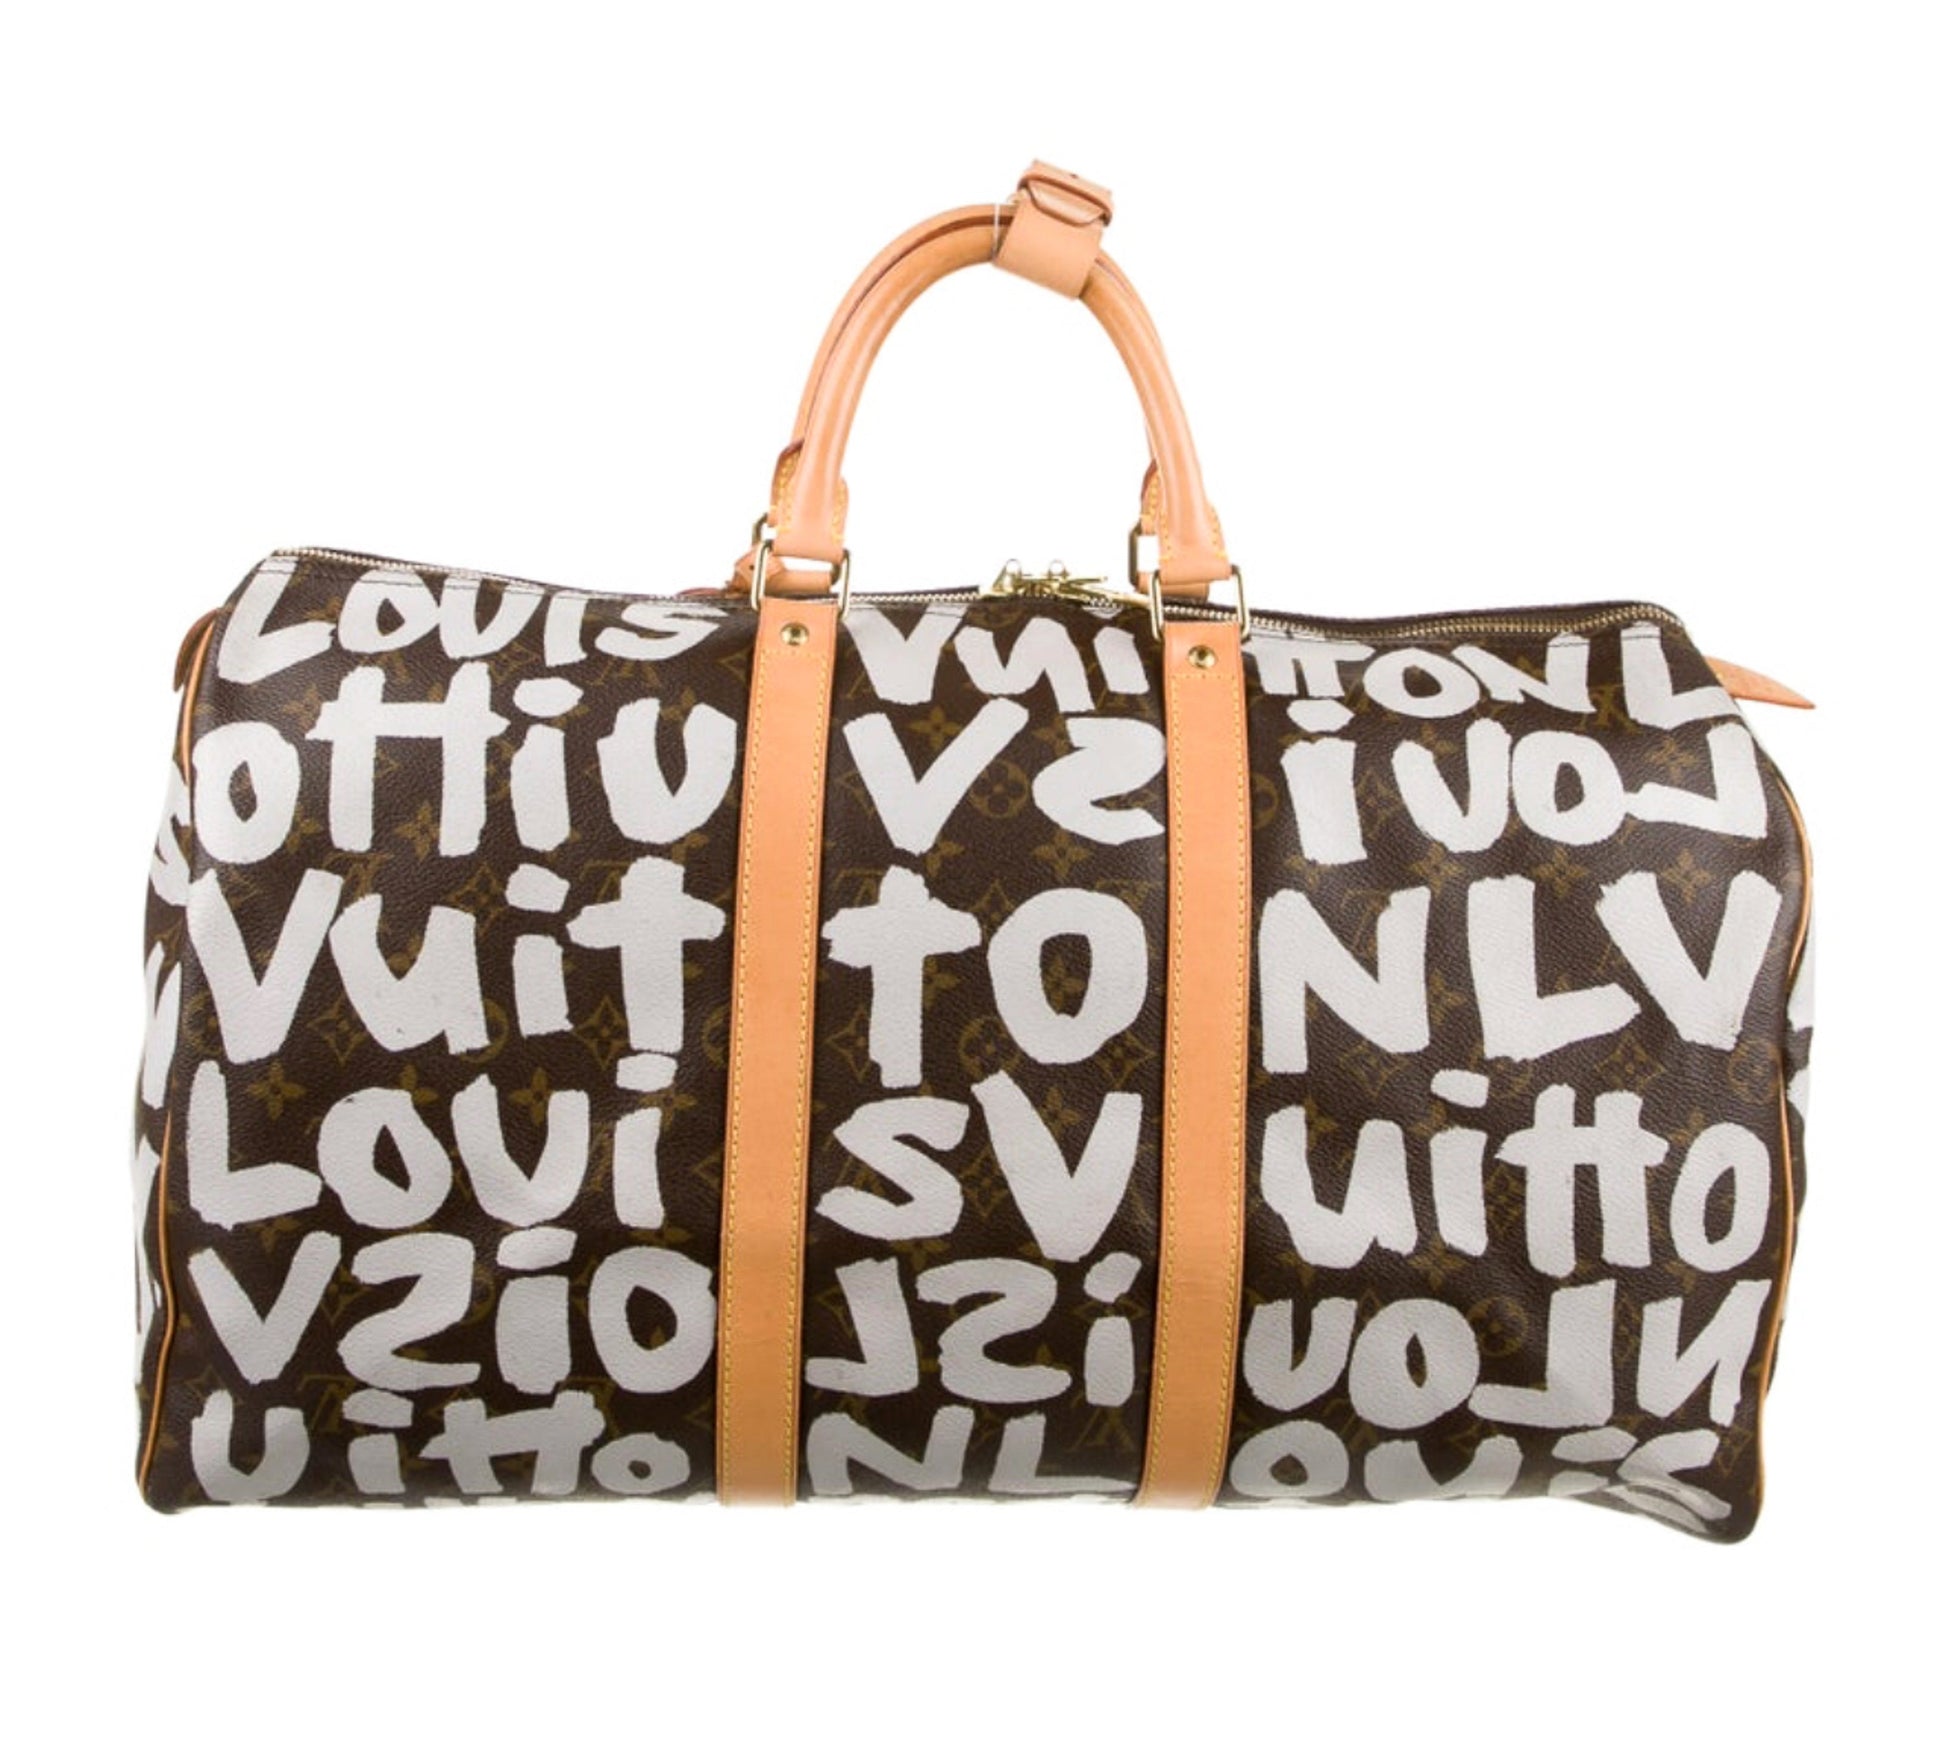 Louis Vuitton Limited Edition Graffiti Keepall 50